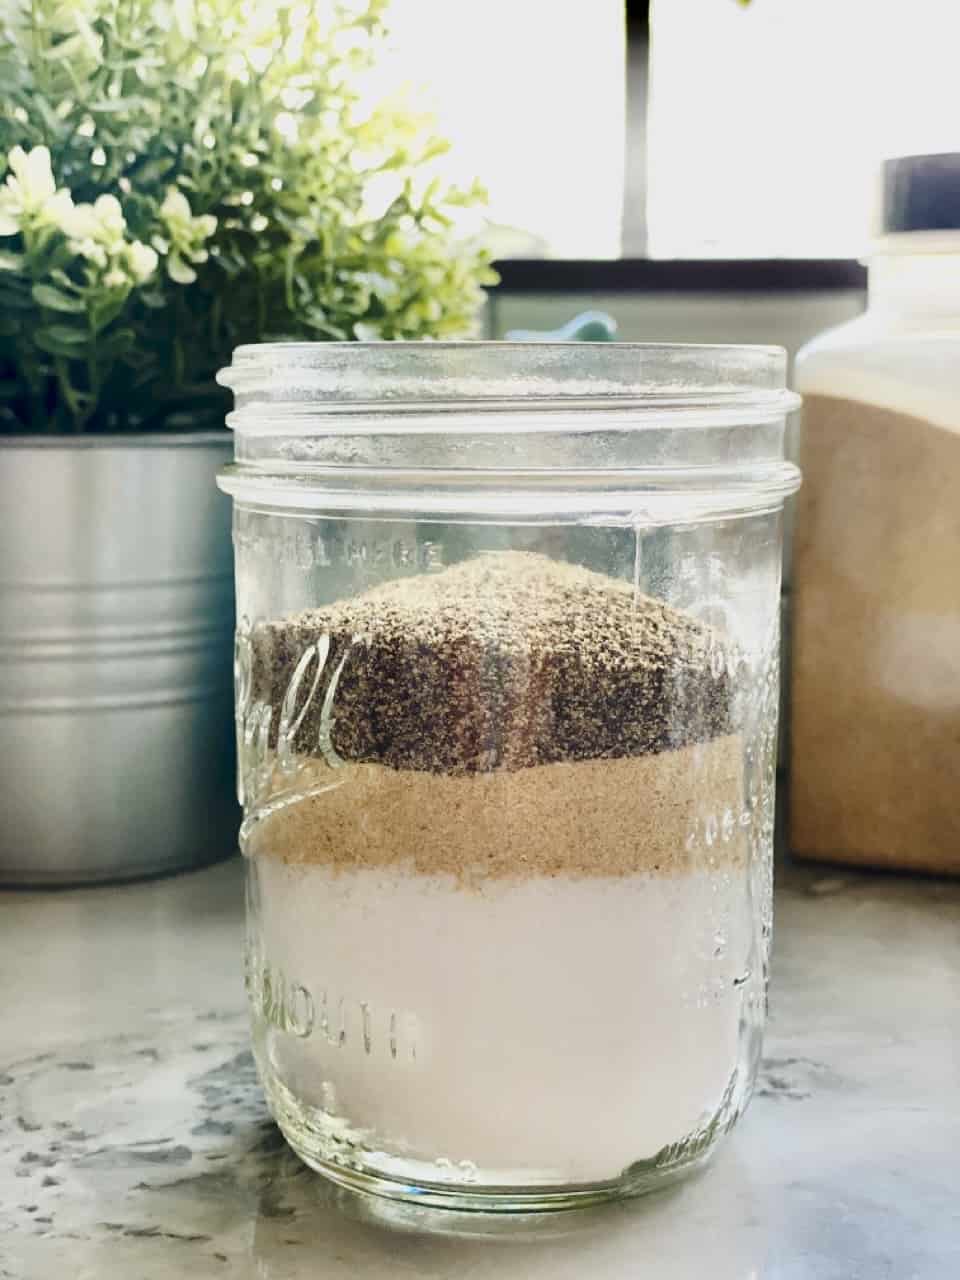 House seasoning ingredients layered in glass jar